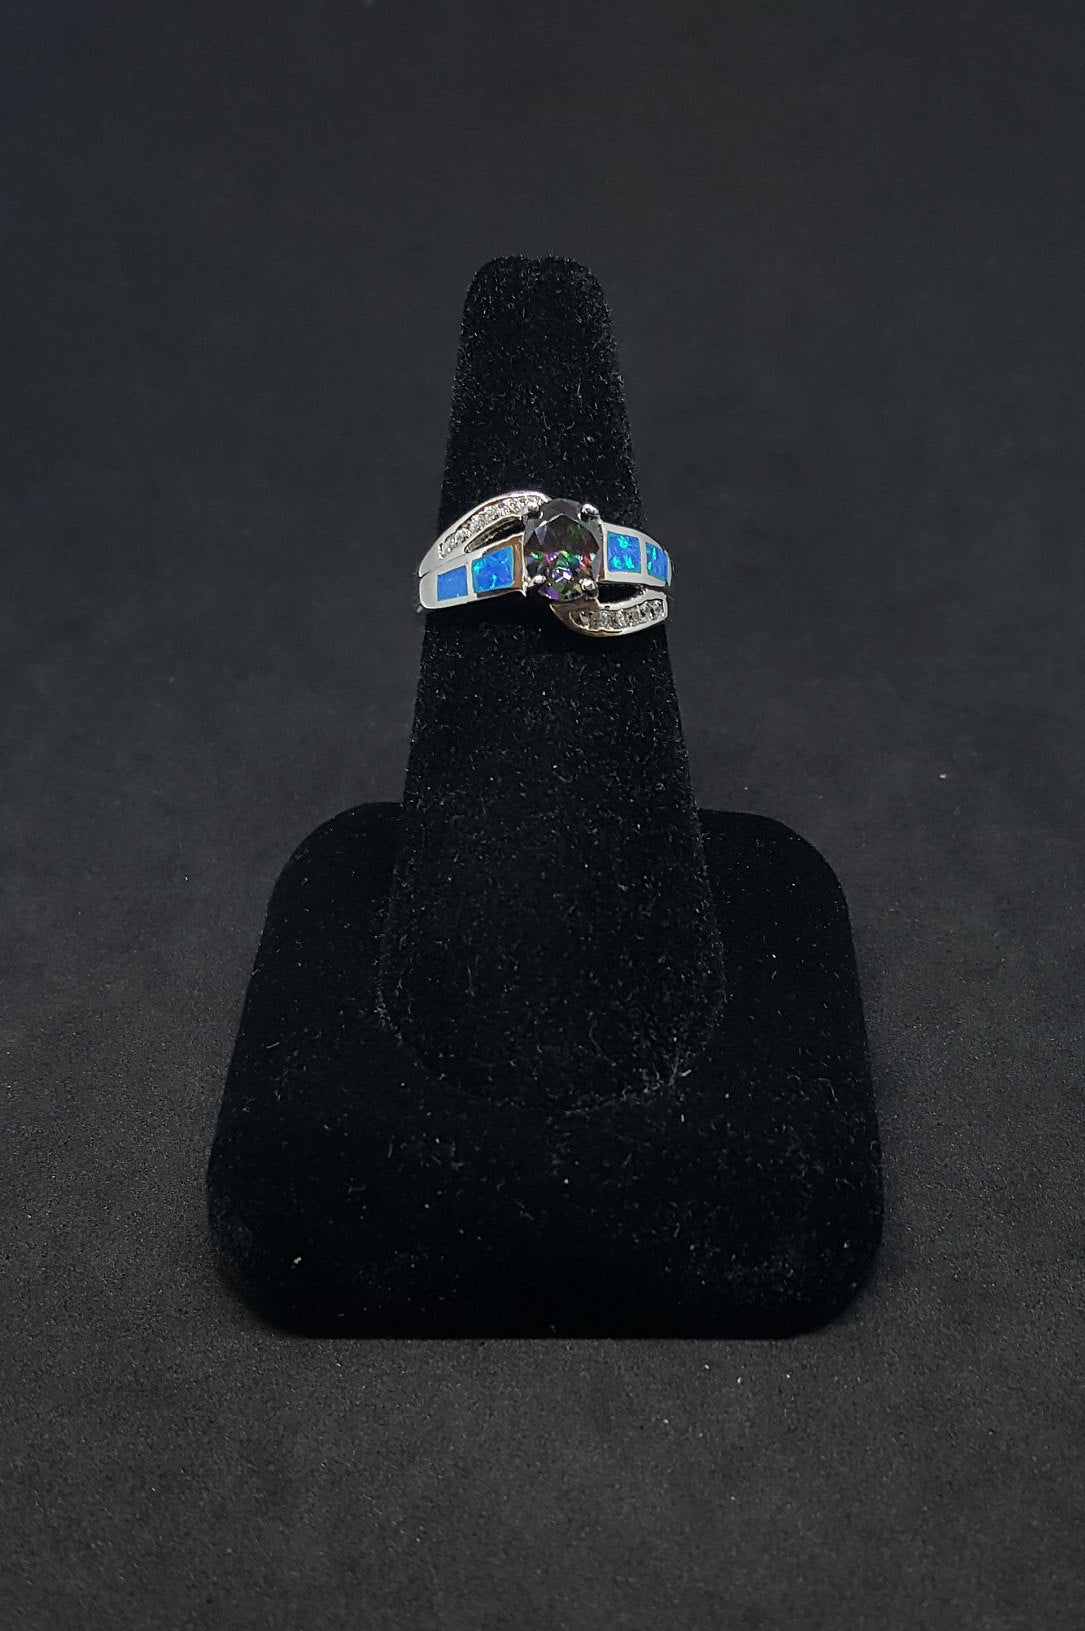 Size 9 - Blue Fire Opal micro CZ Mystic Amethyst Oval shape sterling silver ring